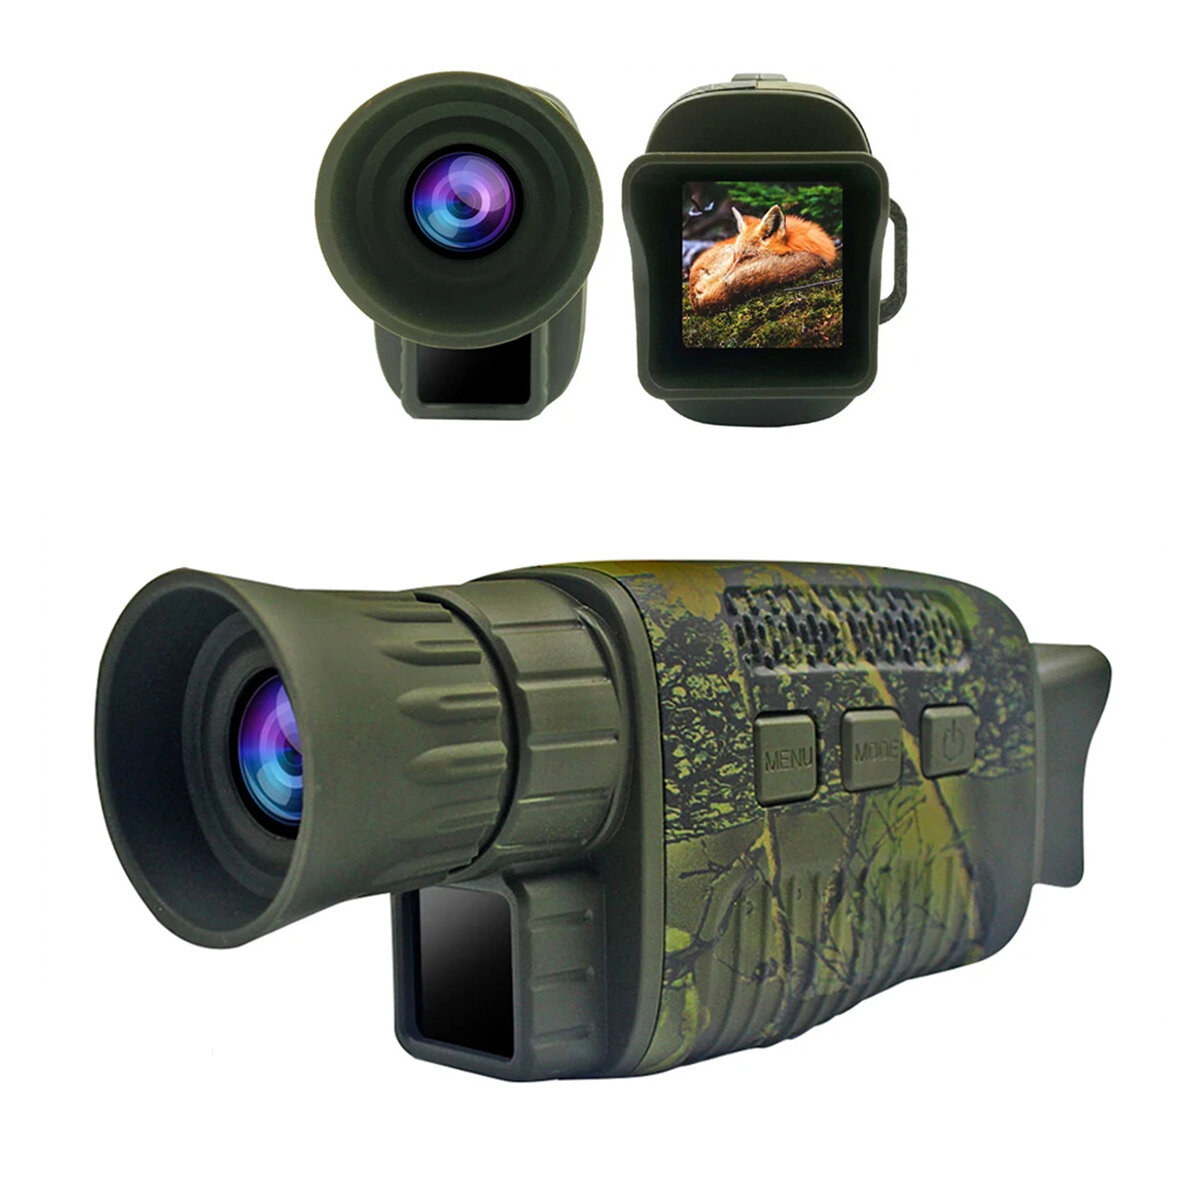 NV1000 Συσκευή νυχτερινής όρασης στον εξωτερικό χώρο, οπτική μονοκοντίνα με υπέρυθρες, ψηφιακή ζουμ 5X και απόσταση πλήρους σκοταδιού προβολής 200Μ